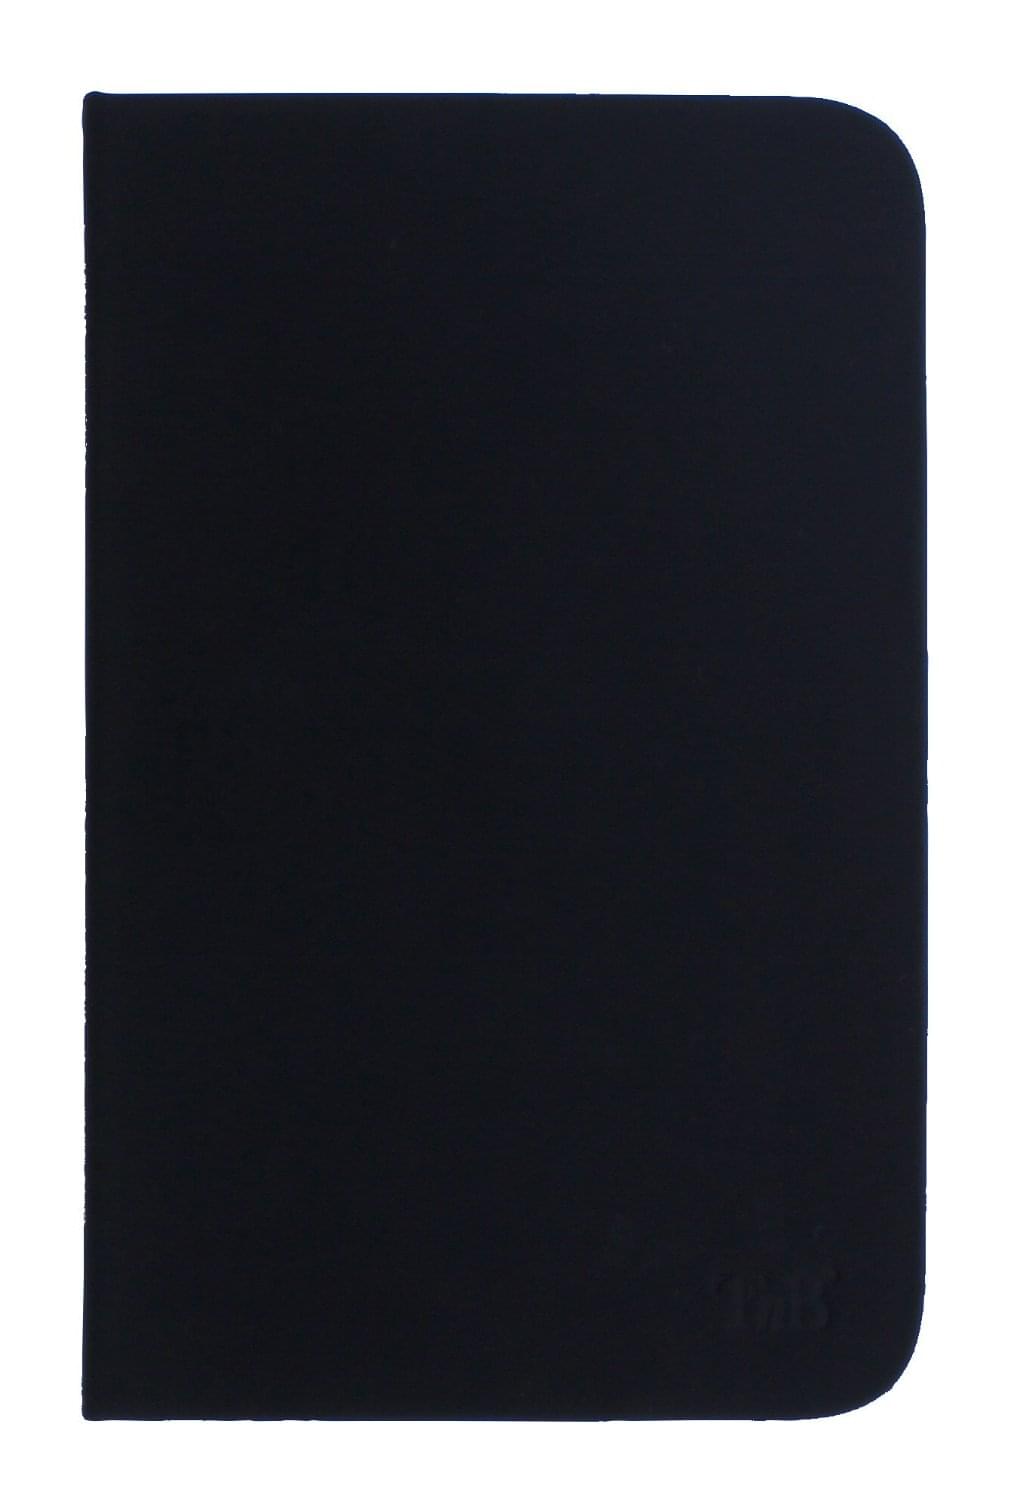 Etui Folio Galaxy Tab 3 7" Noir - Accessoire tablette T'nB - 0